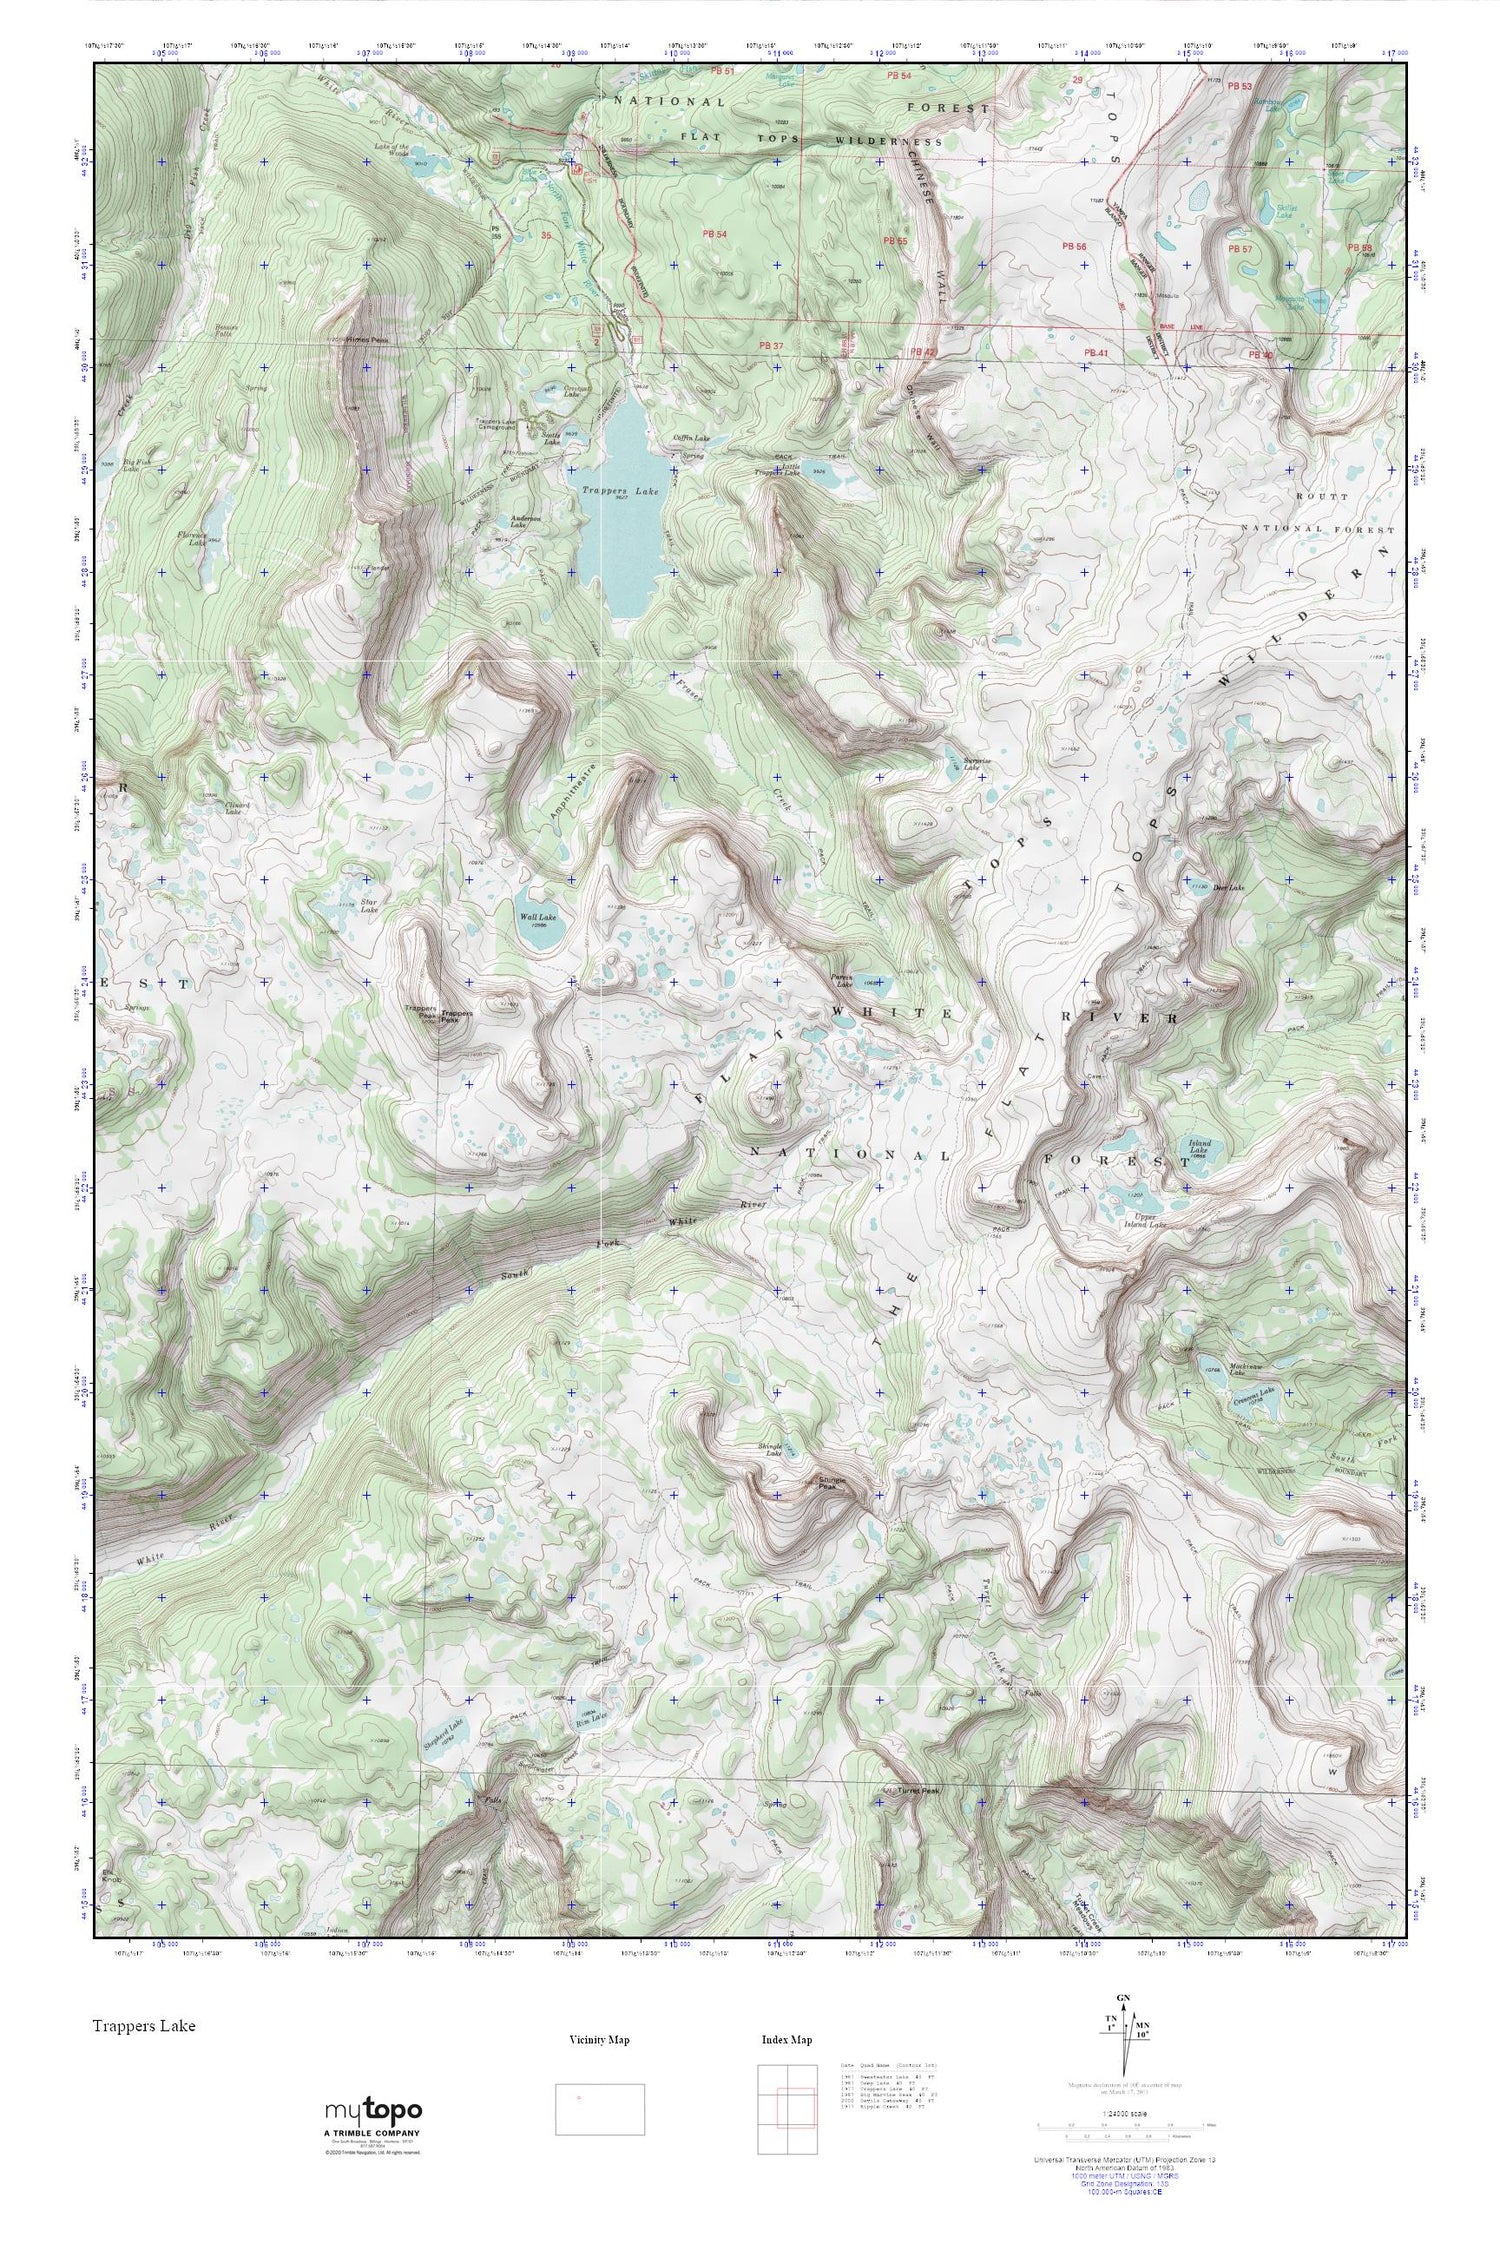 Flat Tops Wilderness MyTopo Explorer Series Map Image